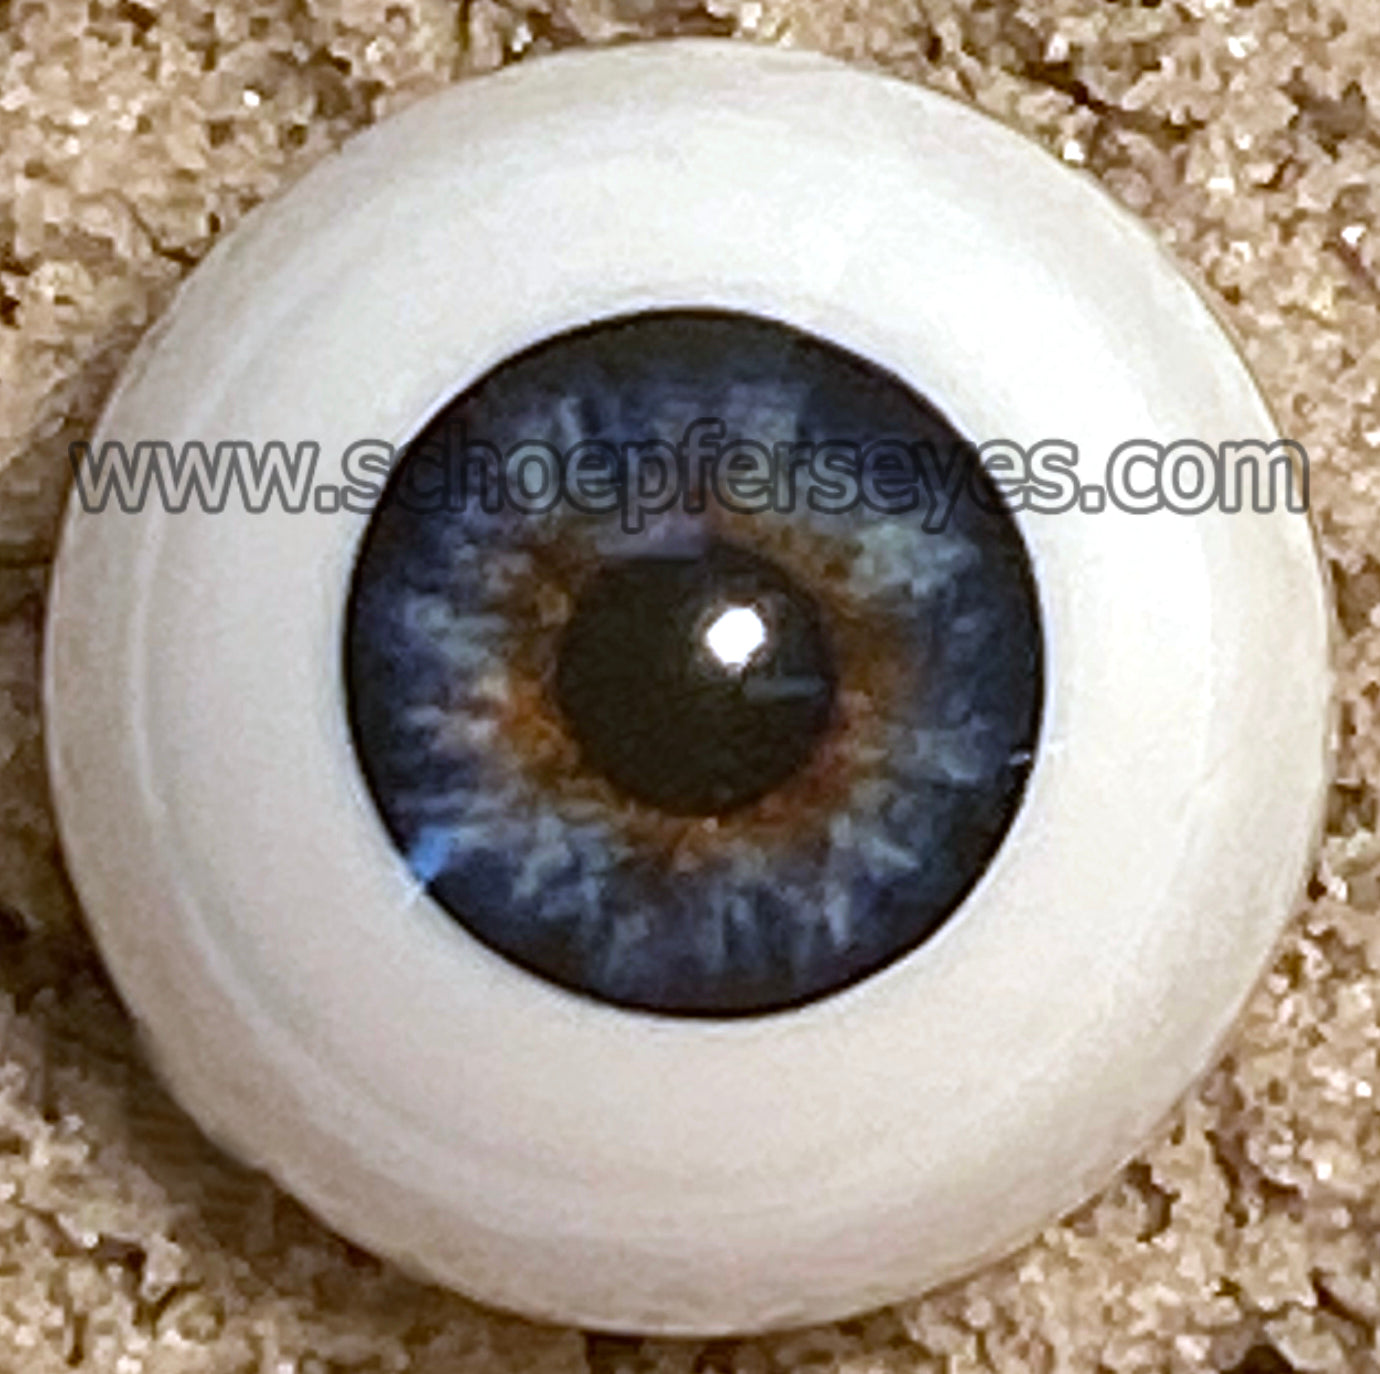 Glastic Realistic Acrylic Doll Eyes - 1 pair (5050 Series)